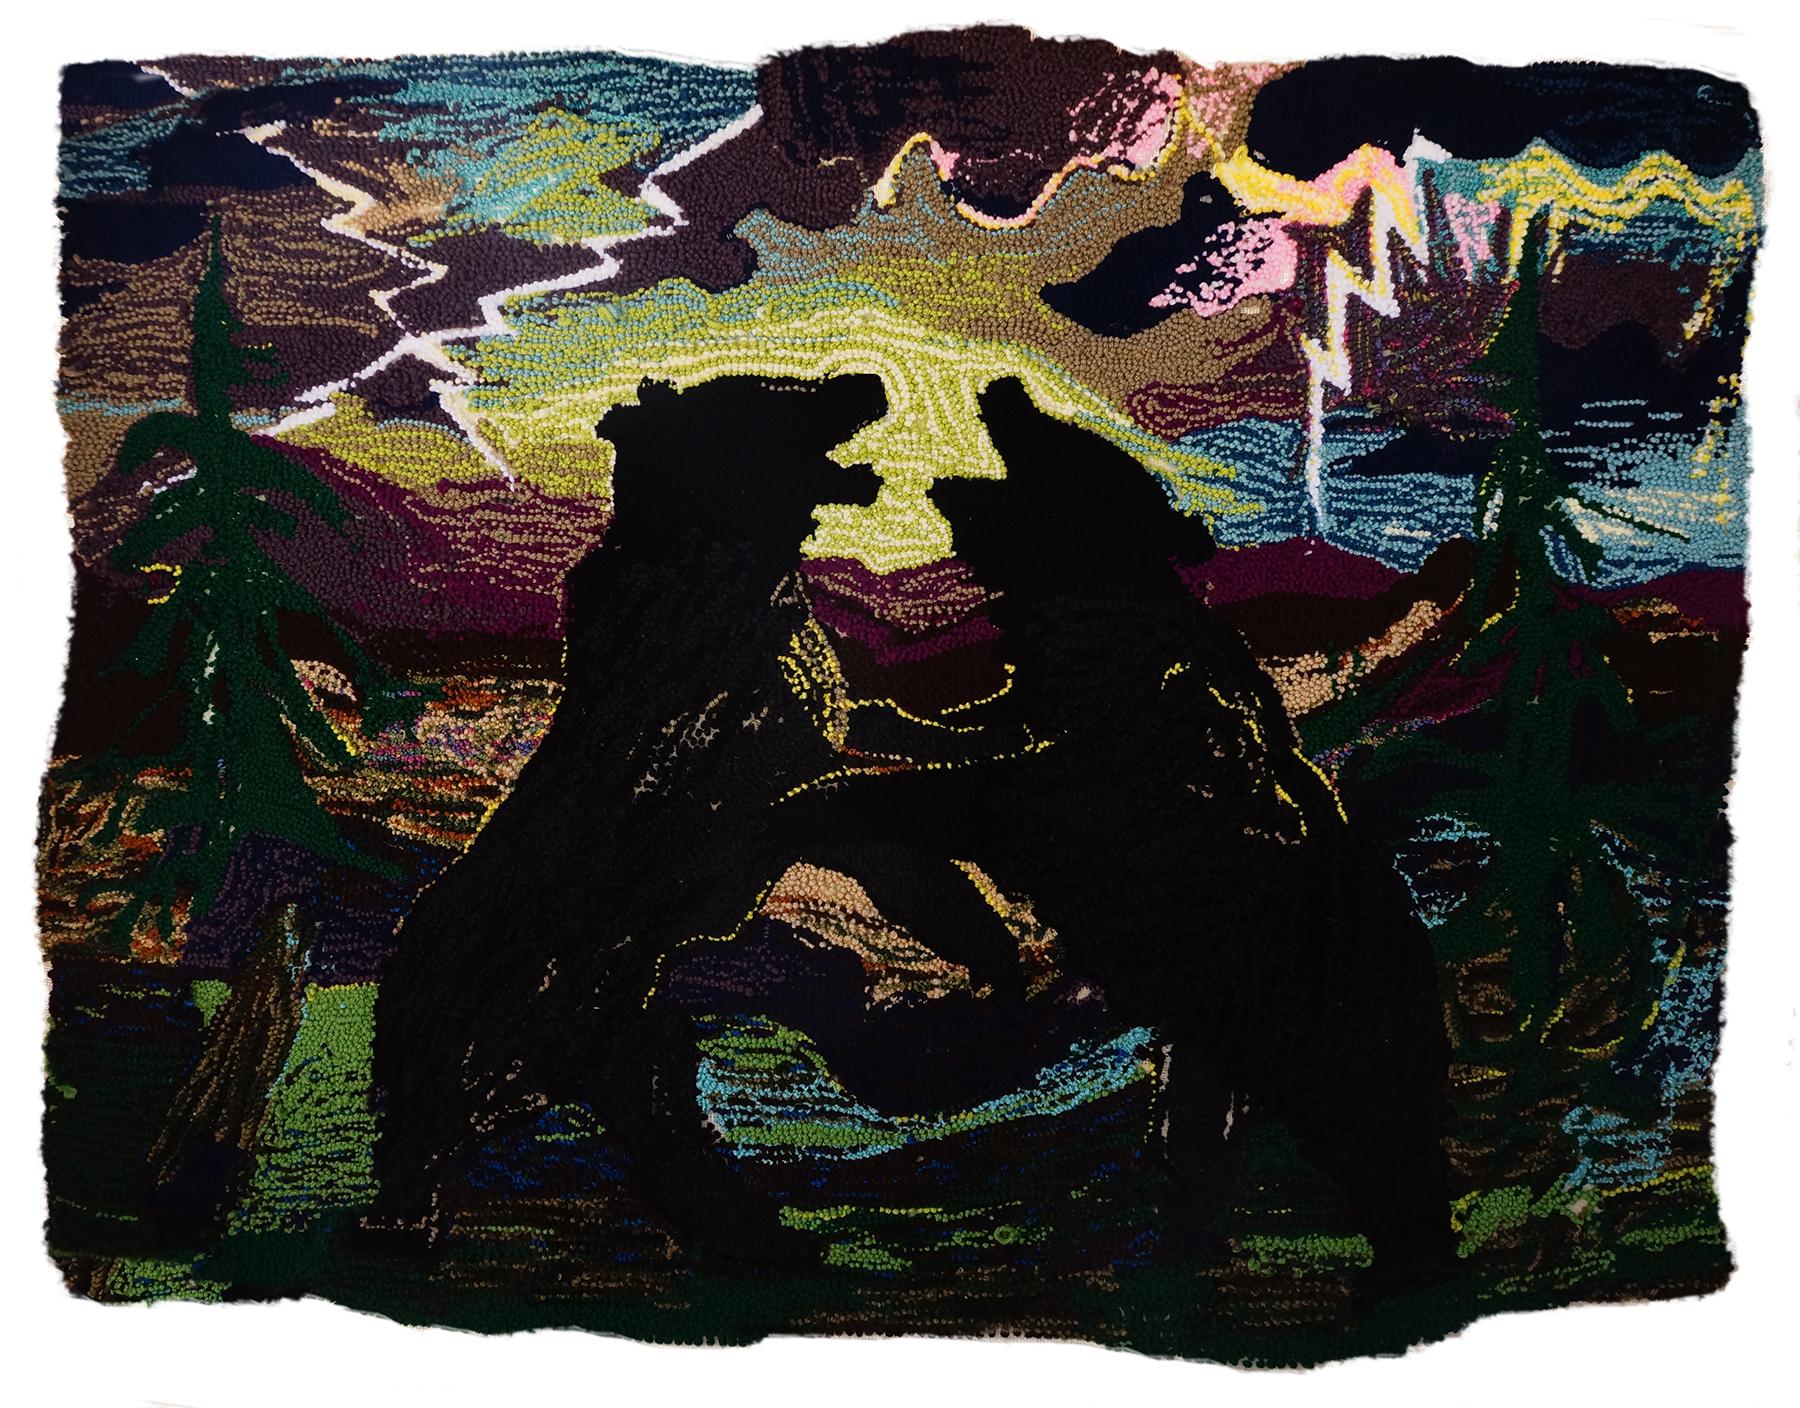 Bears Fighting in a Thunderstorm - Mixed Media Art by John Defeo